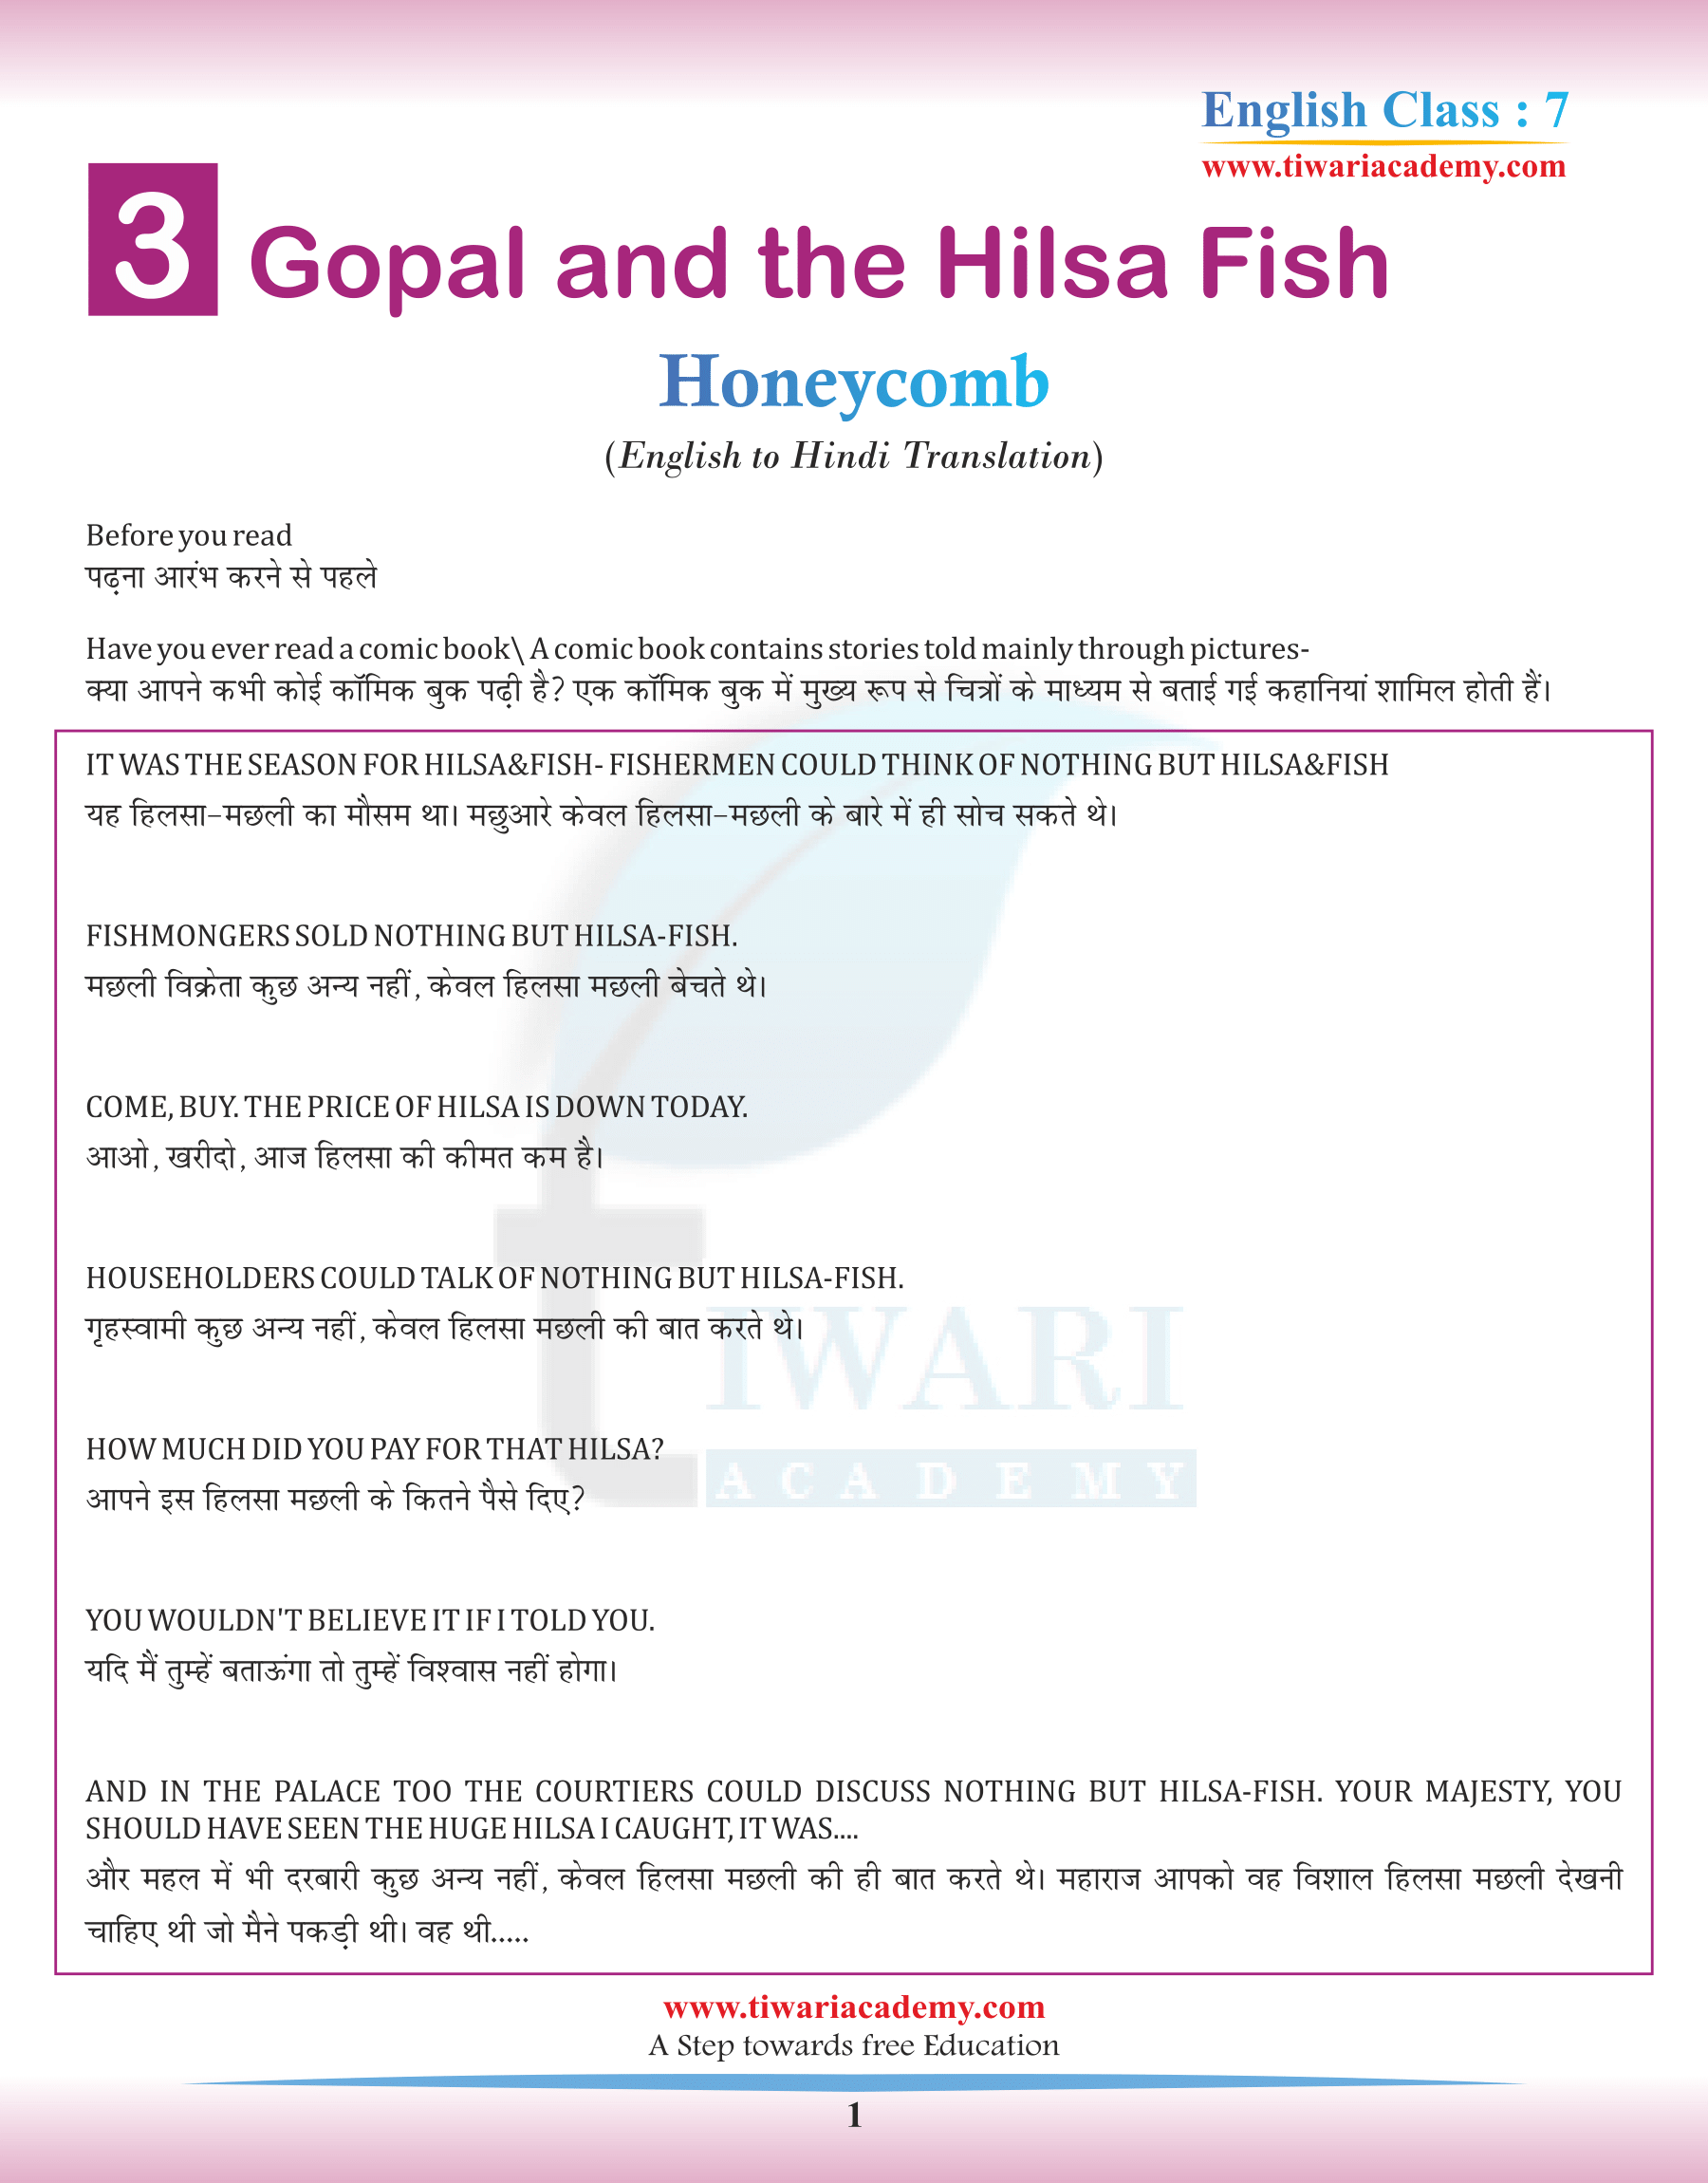 Class 7 English Honeycomb Chapter 3 Gopal and the Hilsa Fish in Hindi Medium